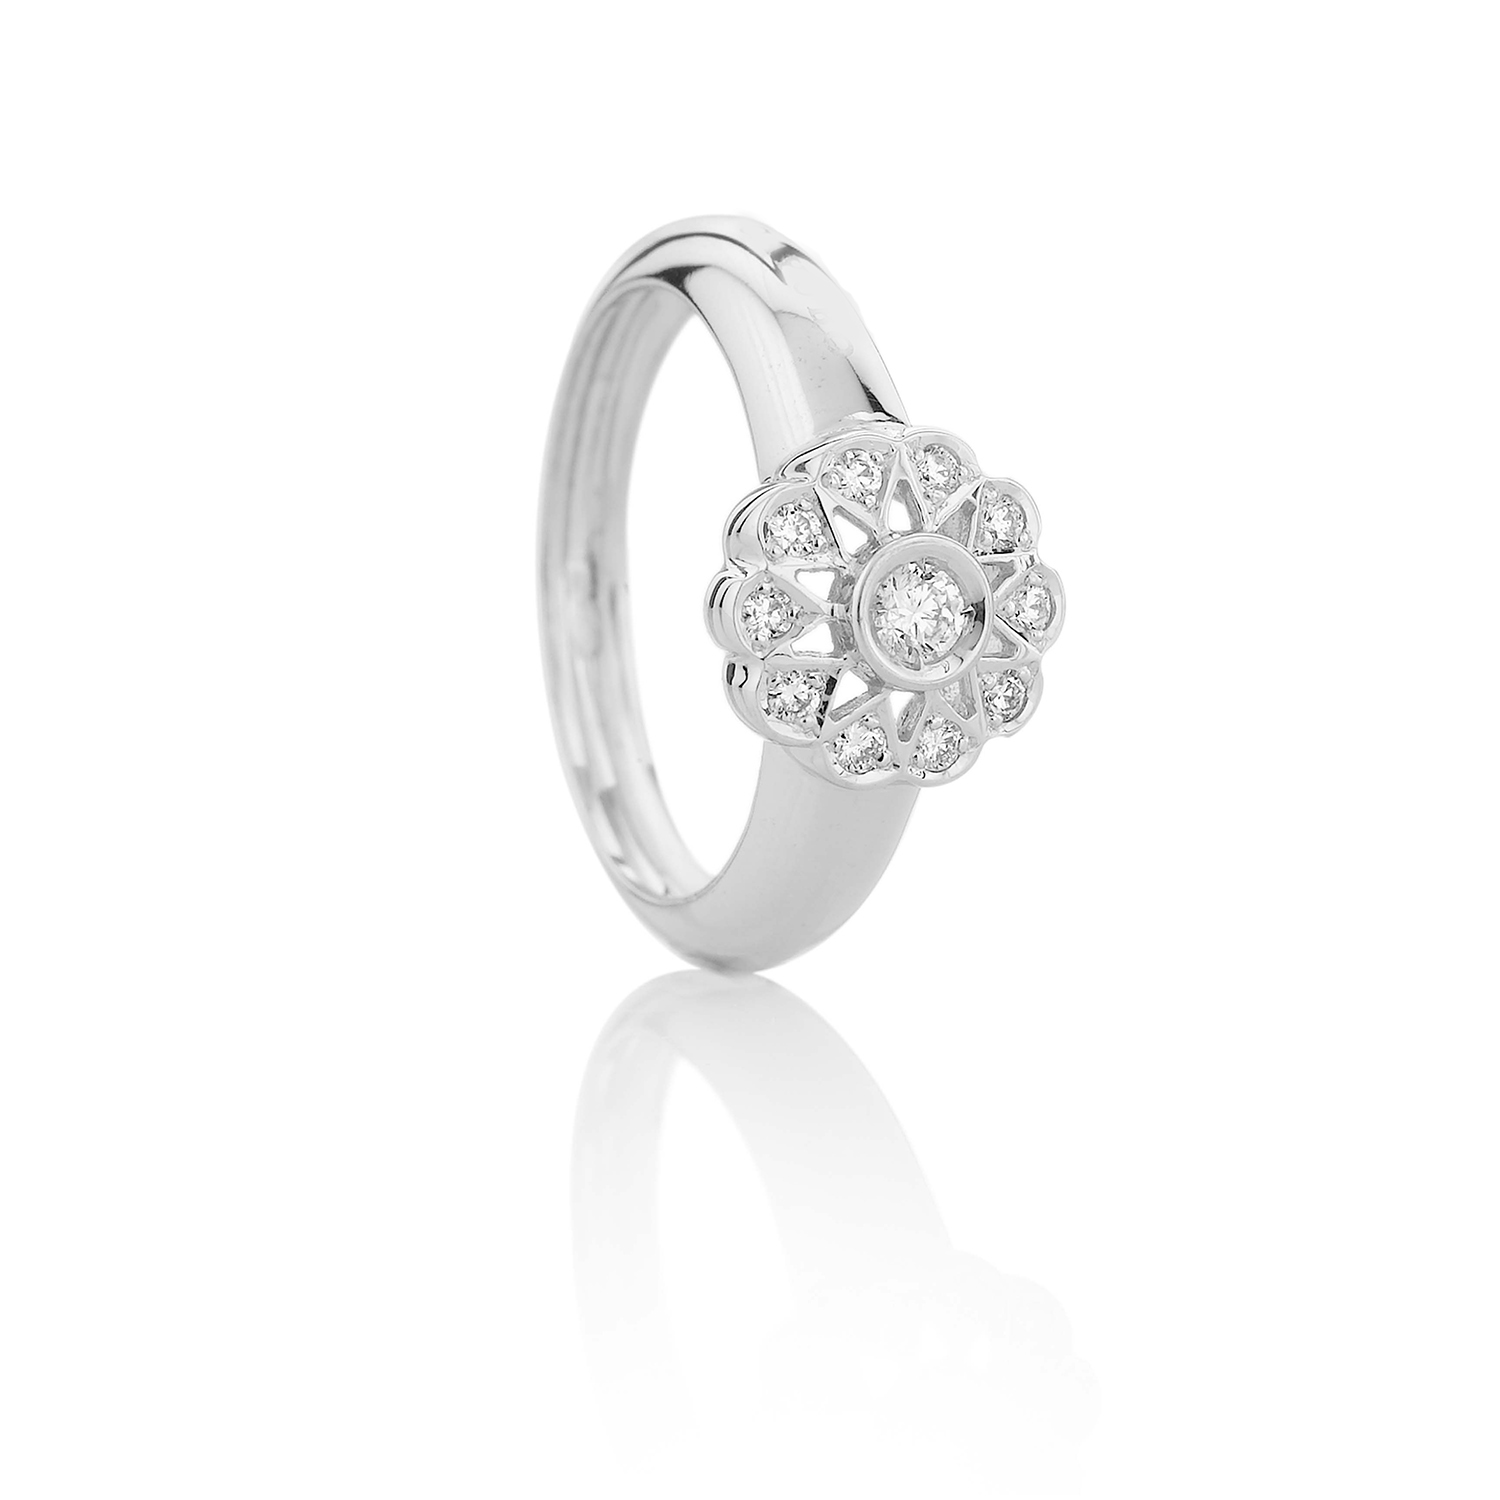 Sensi joyas jewellery Granada silver engagement18K GOLD RING DIAMONDS 0,25 CTS